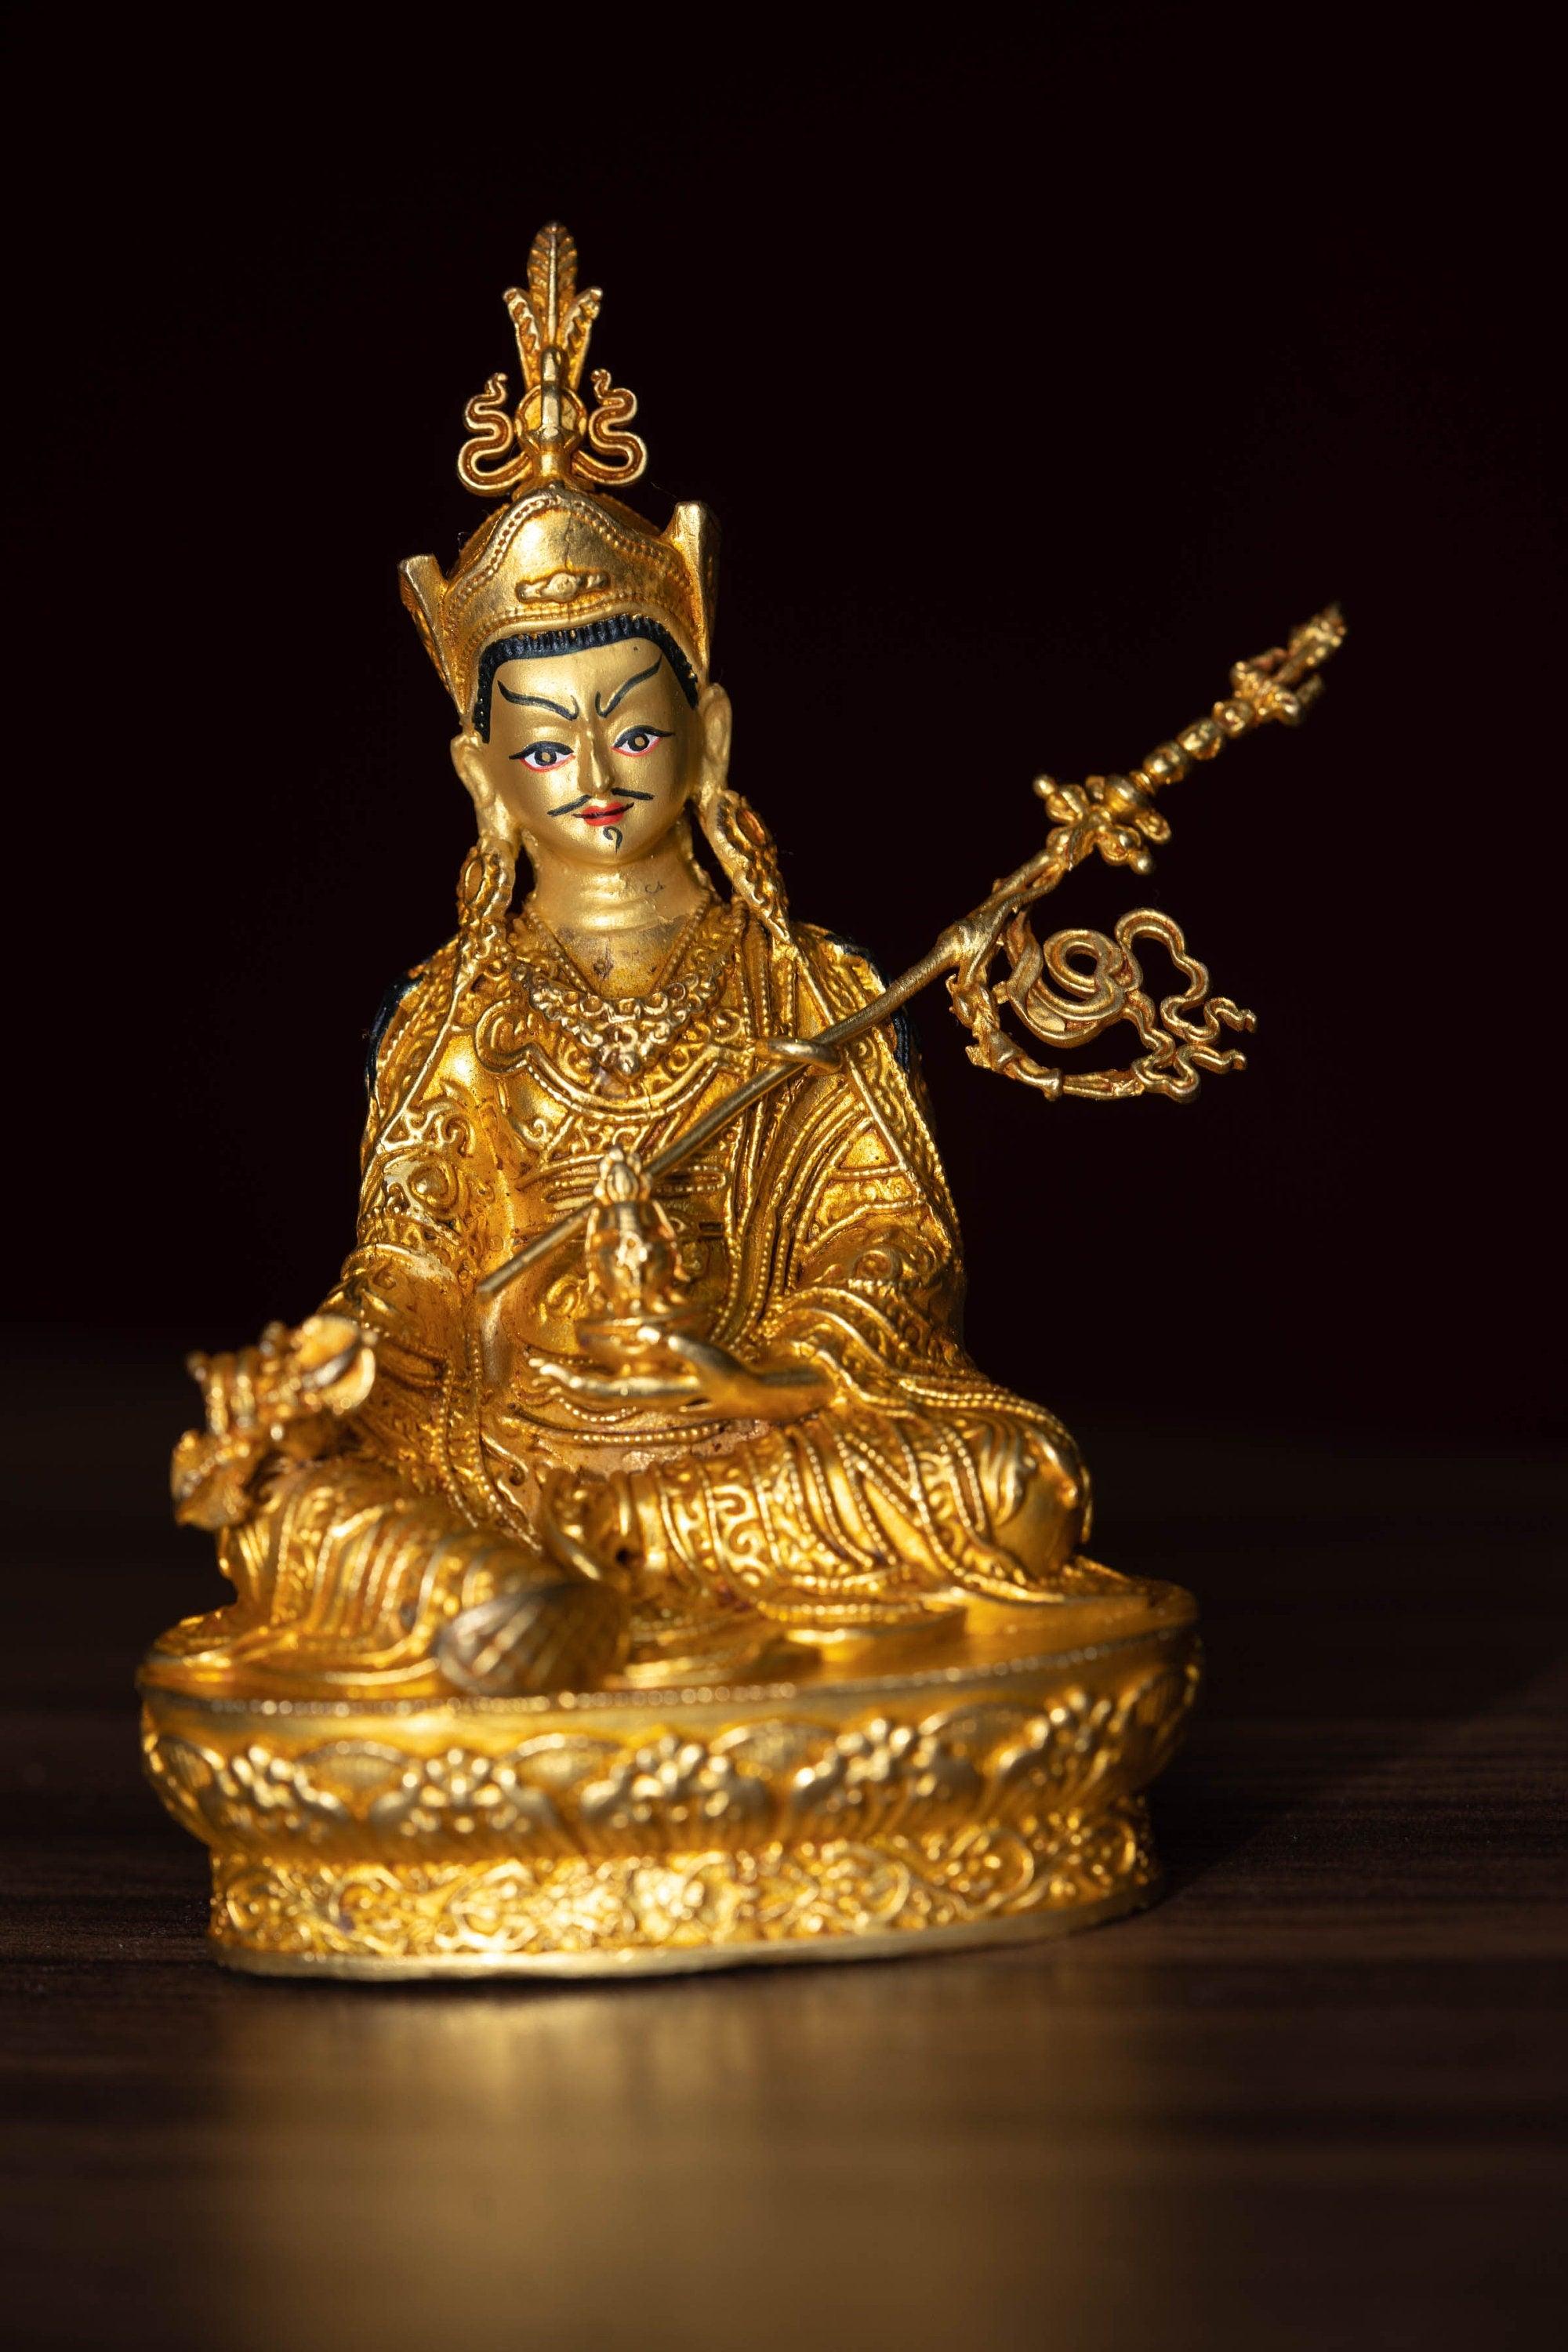 Small size 4 inch Guru Padmasambhava is gold plated on metal.